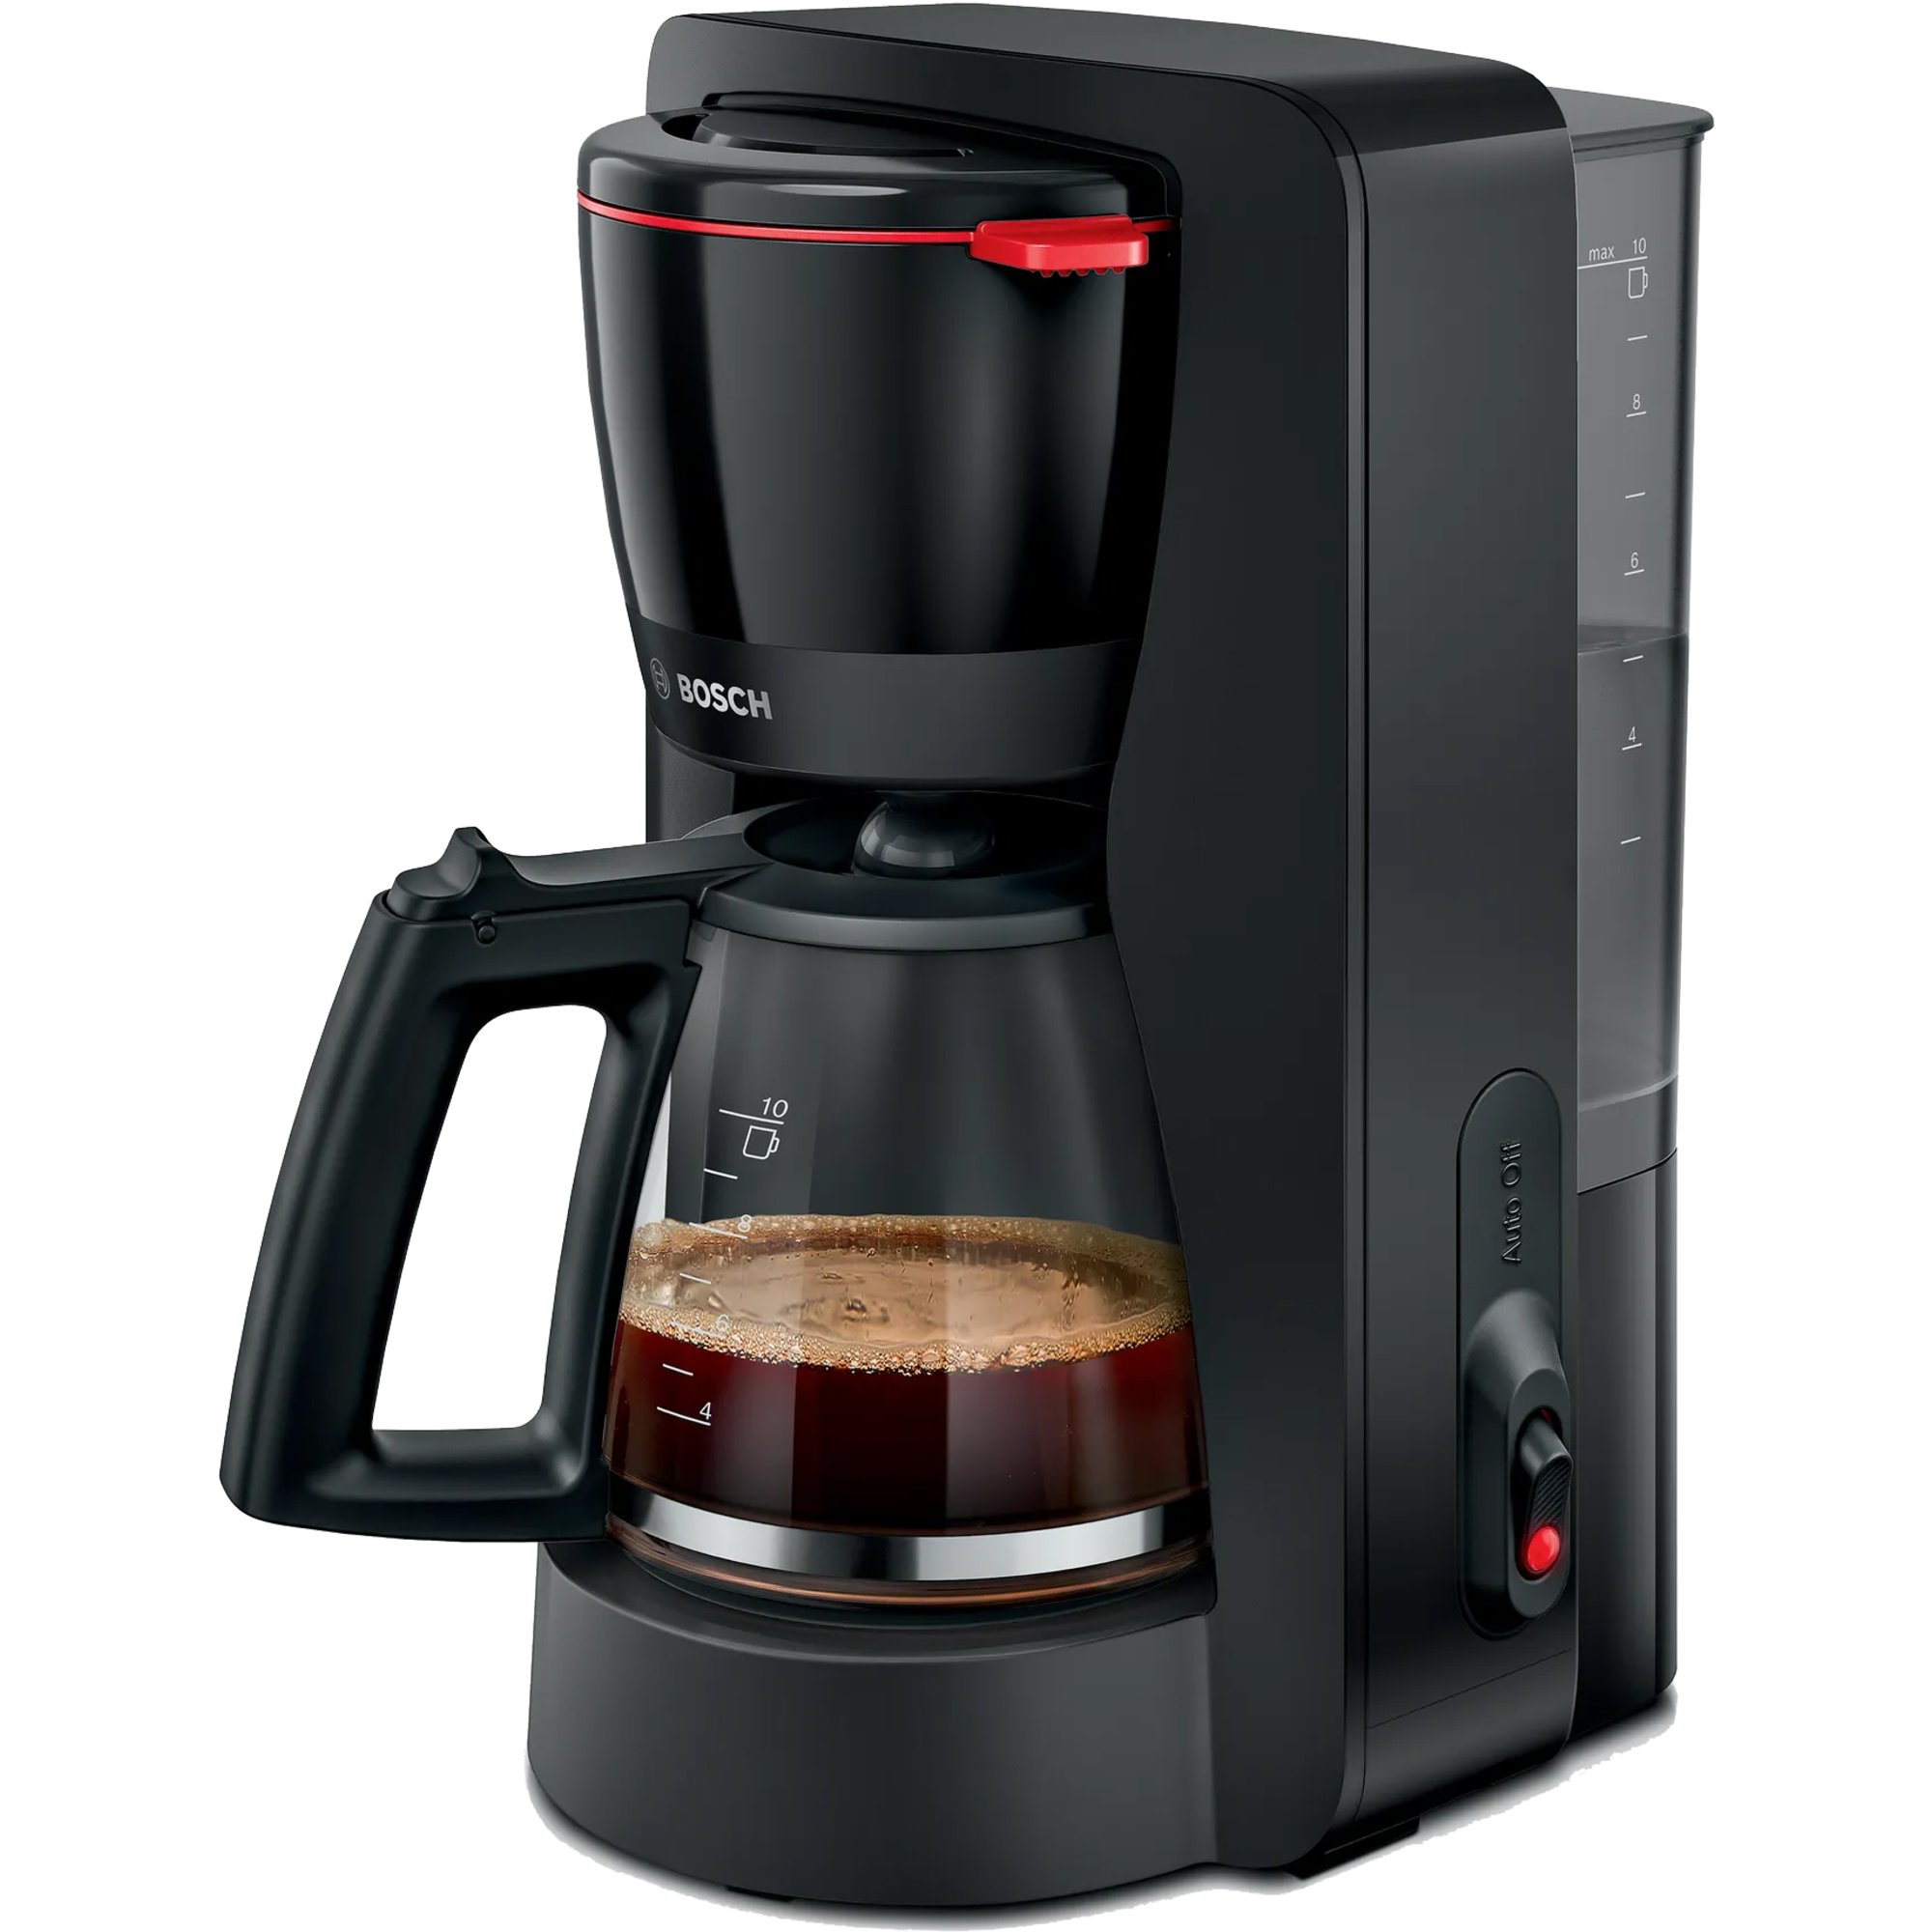 Bosch MyMoment Kaffemaskine med glaskande sort